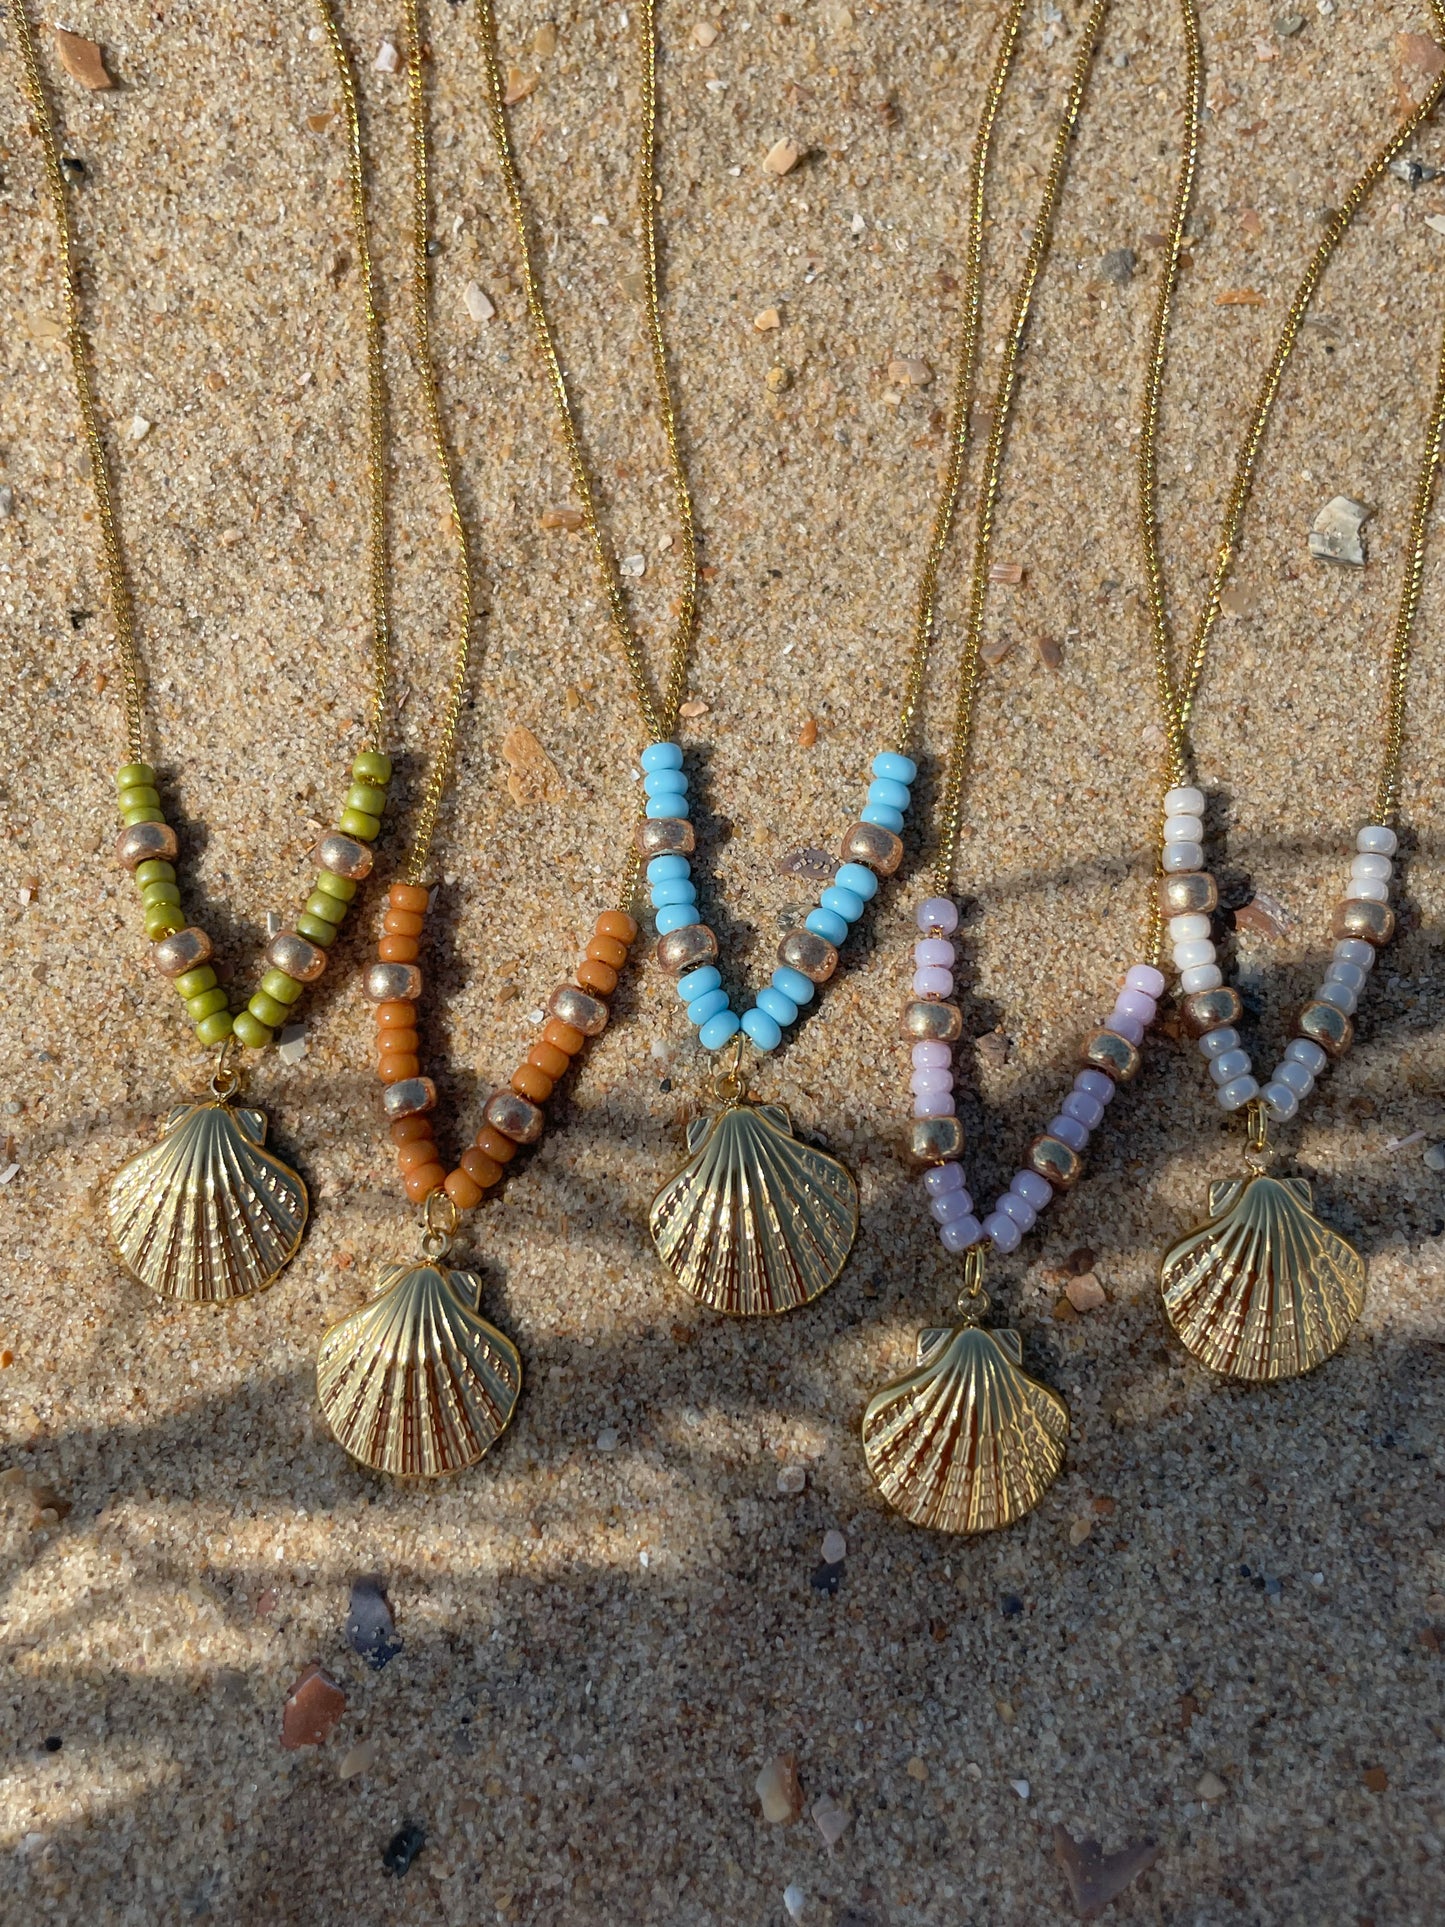 Seashell necklace blue